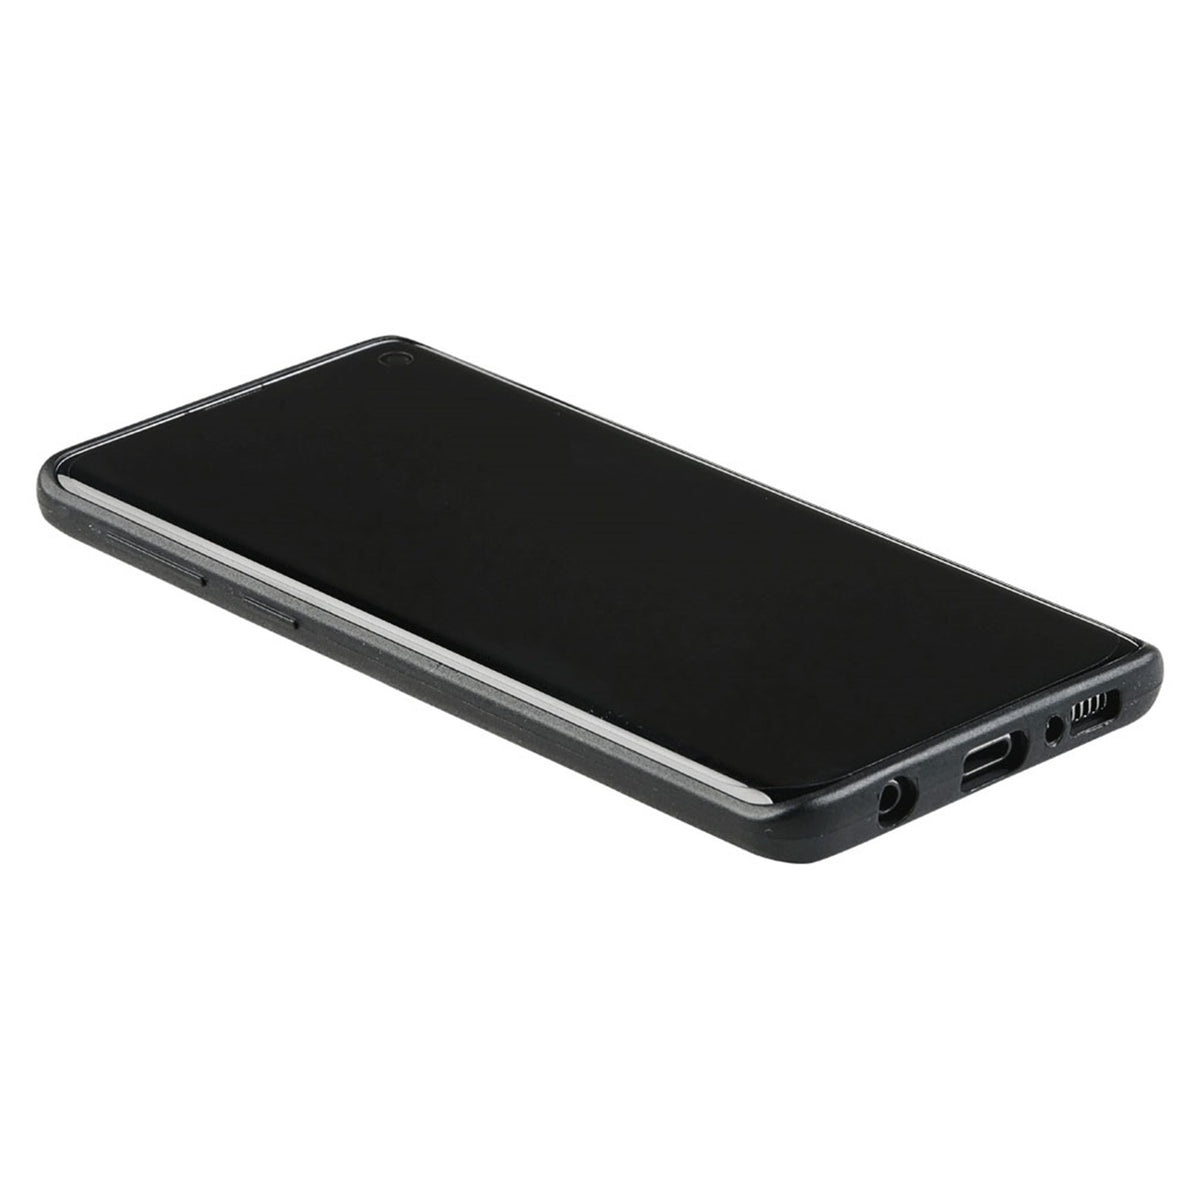 GreyLime-Samsung-Galaxy-S10-Plus-biodegradable-cover-Black-COSAM10P01-V3.jpg